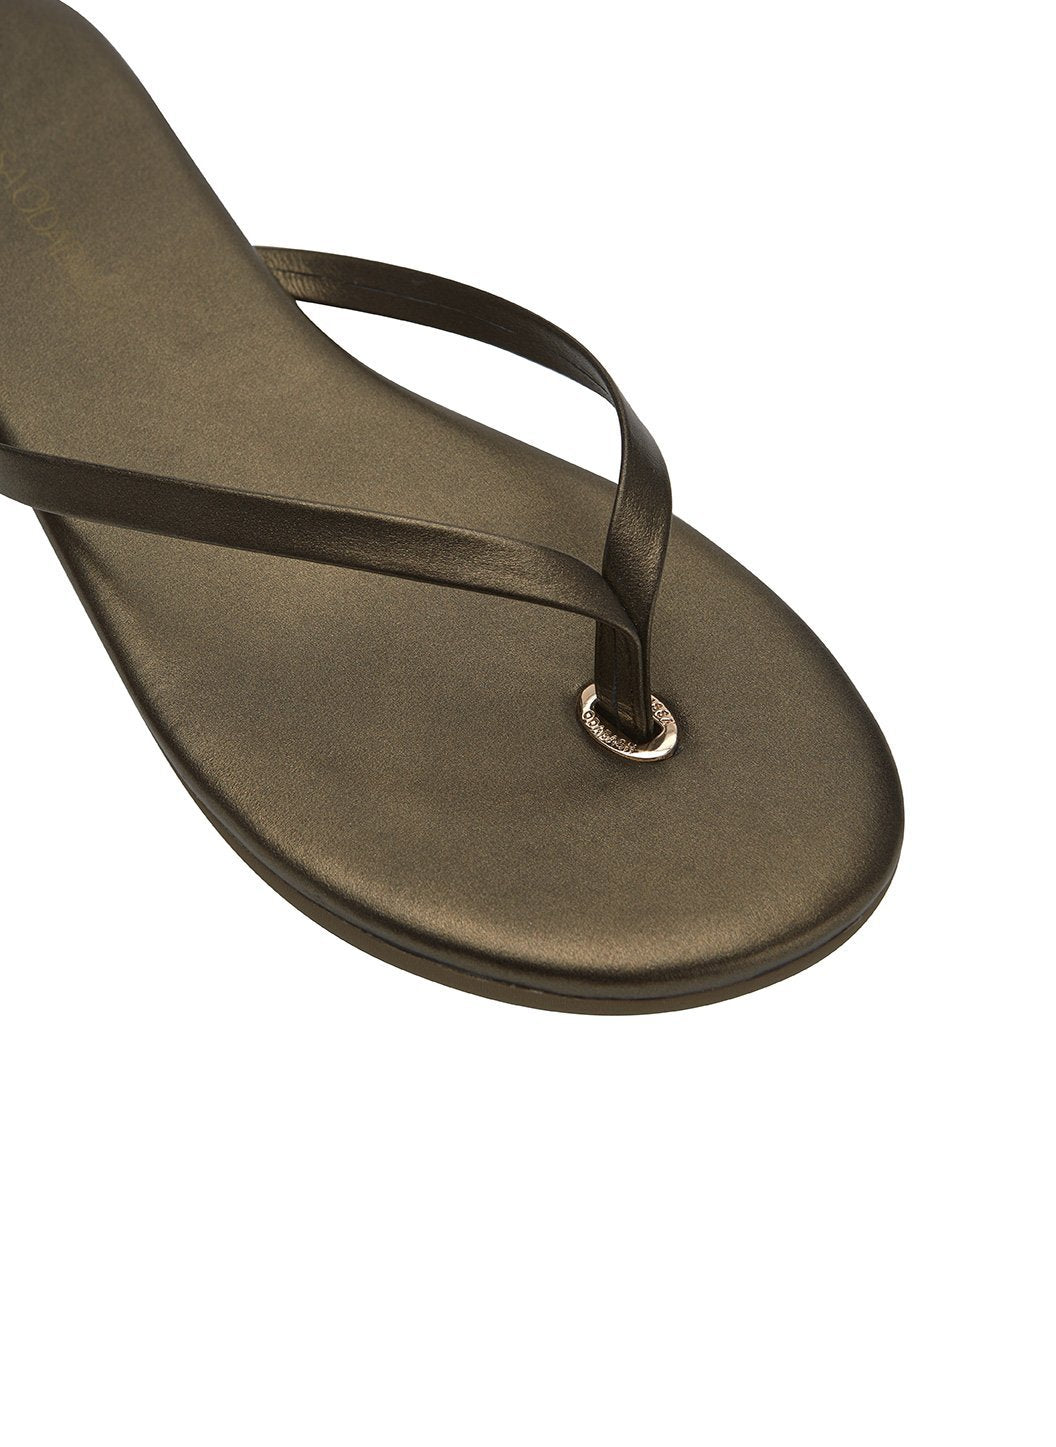 flip flop leather bronze 2019 3